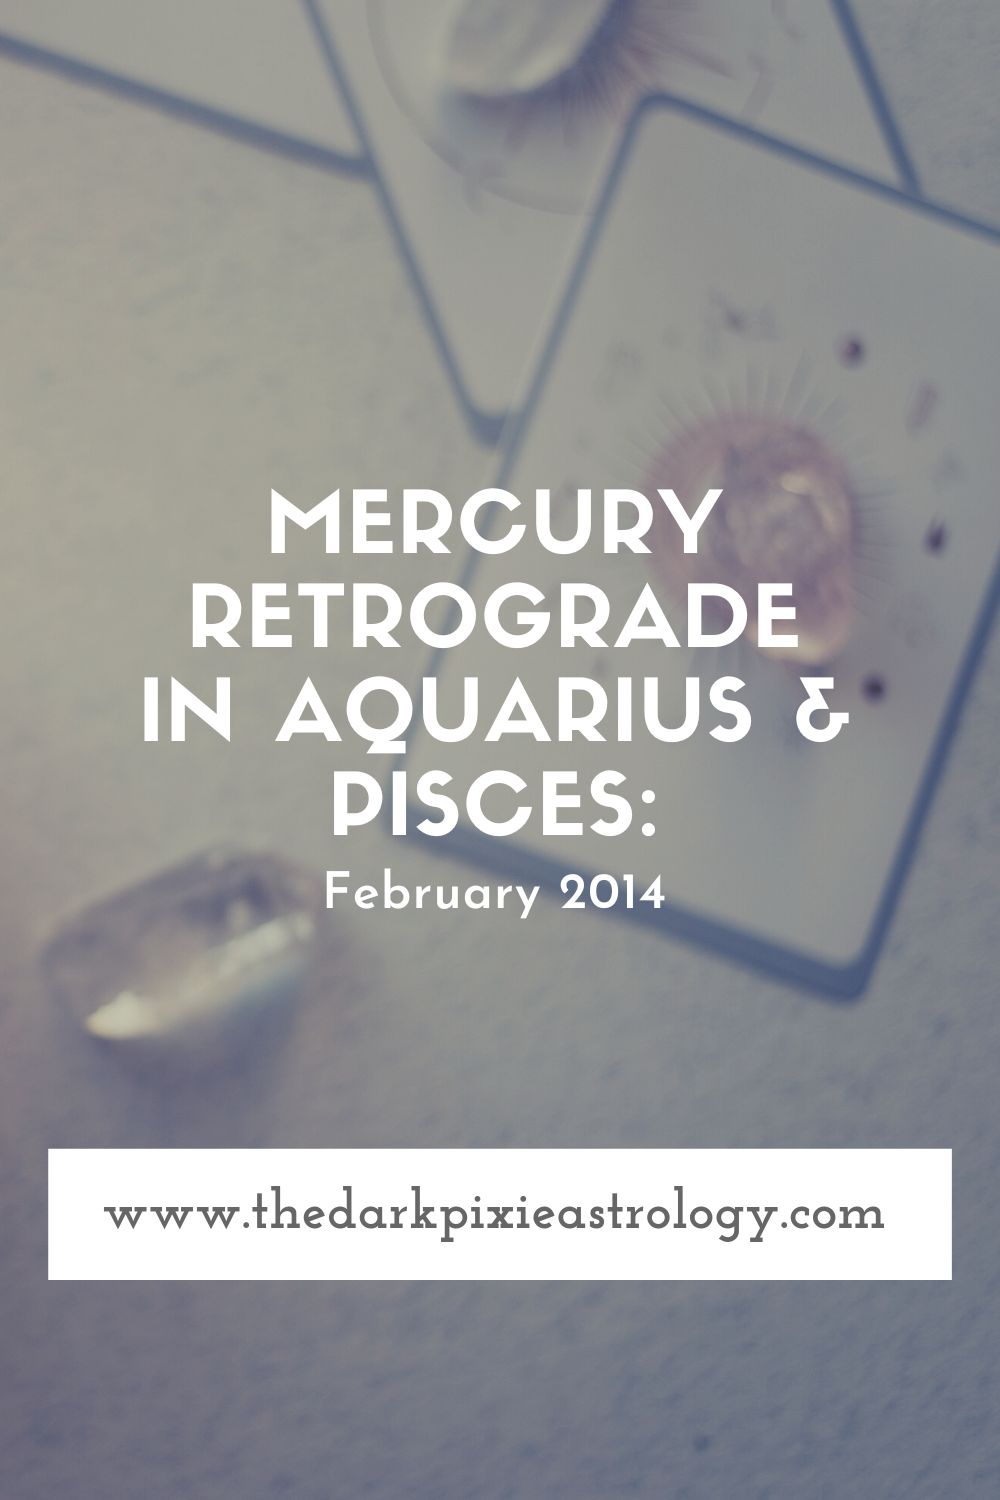 Mercury retrograde in Aquarius & Pisces: February 2014 - The Dark Pixie Astrology